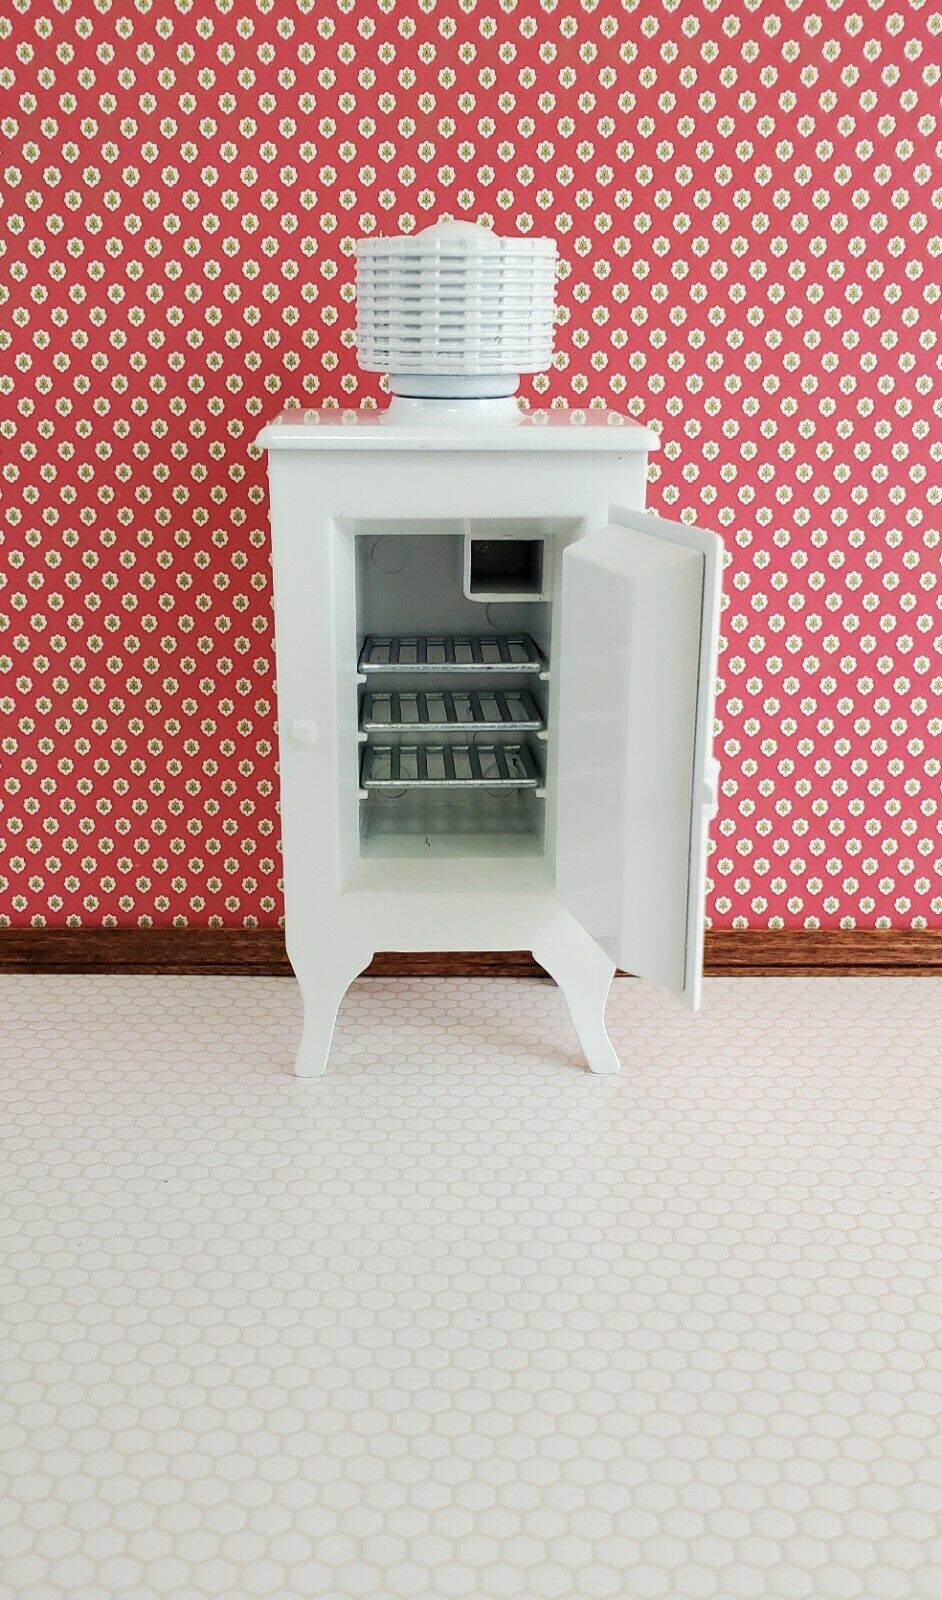 Dollhouse Miniature Fridge Monitor Top Refrigerator Vintage 1920s Style 1:12 - Miniature Crush